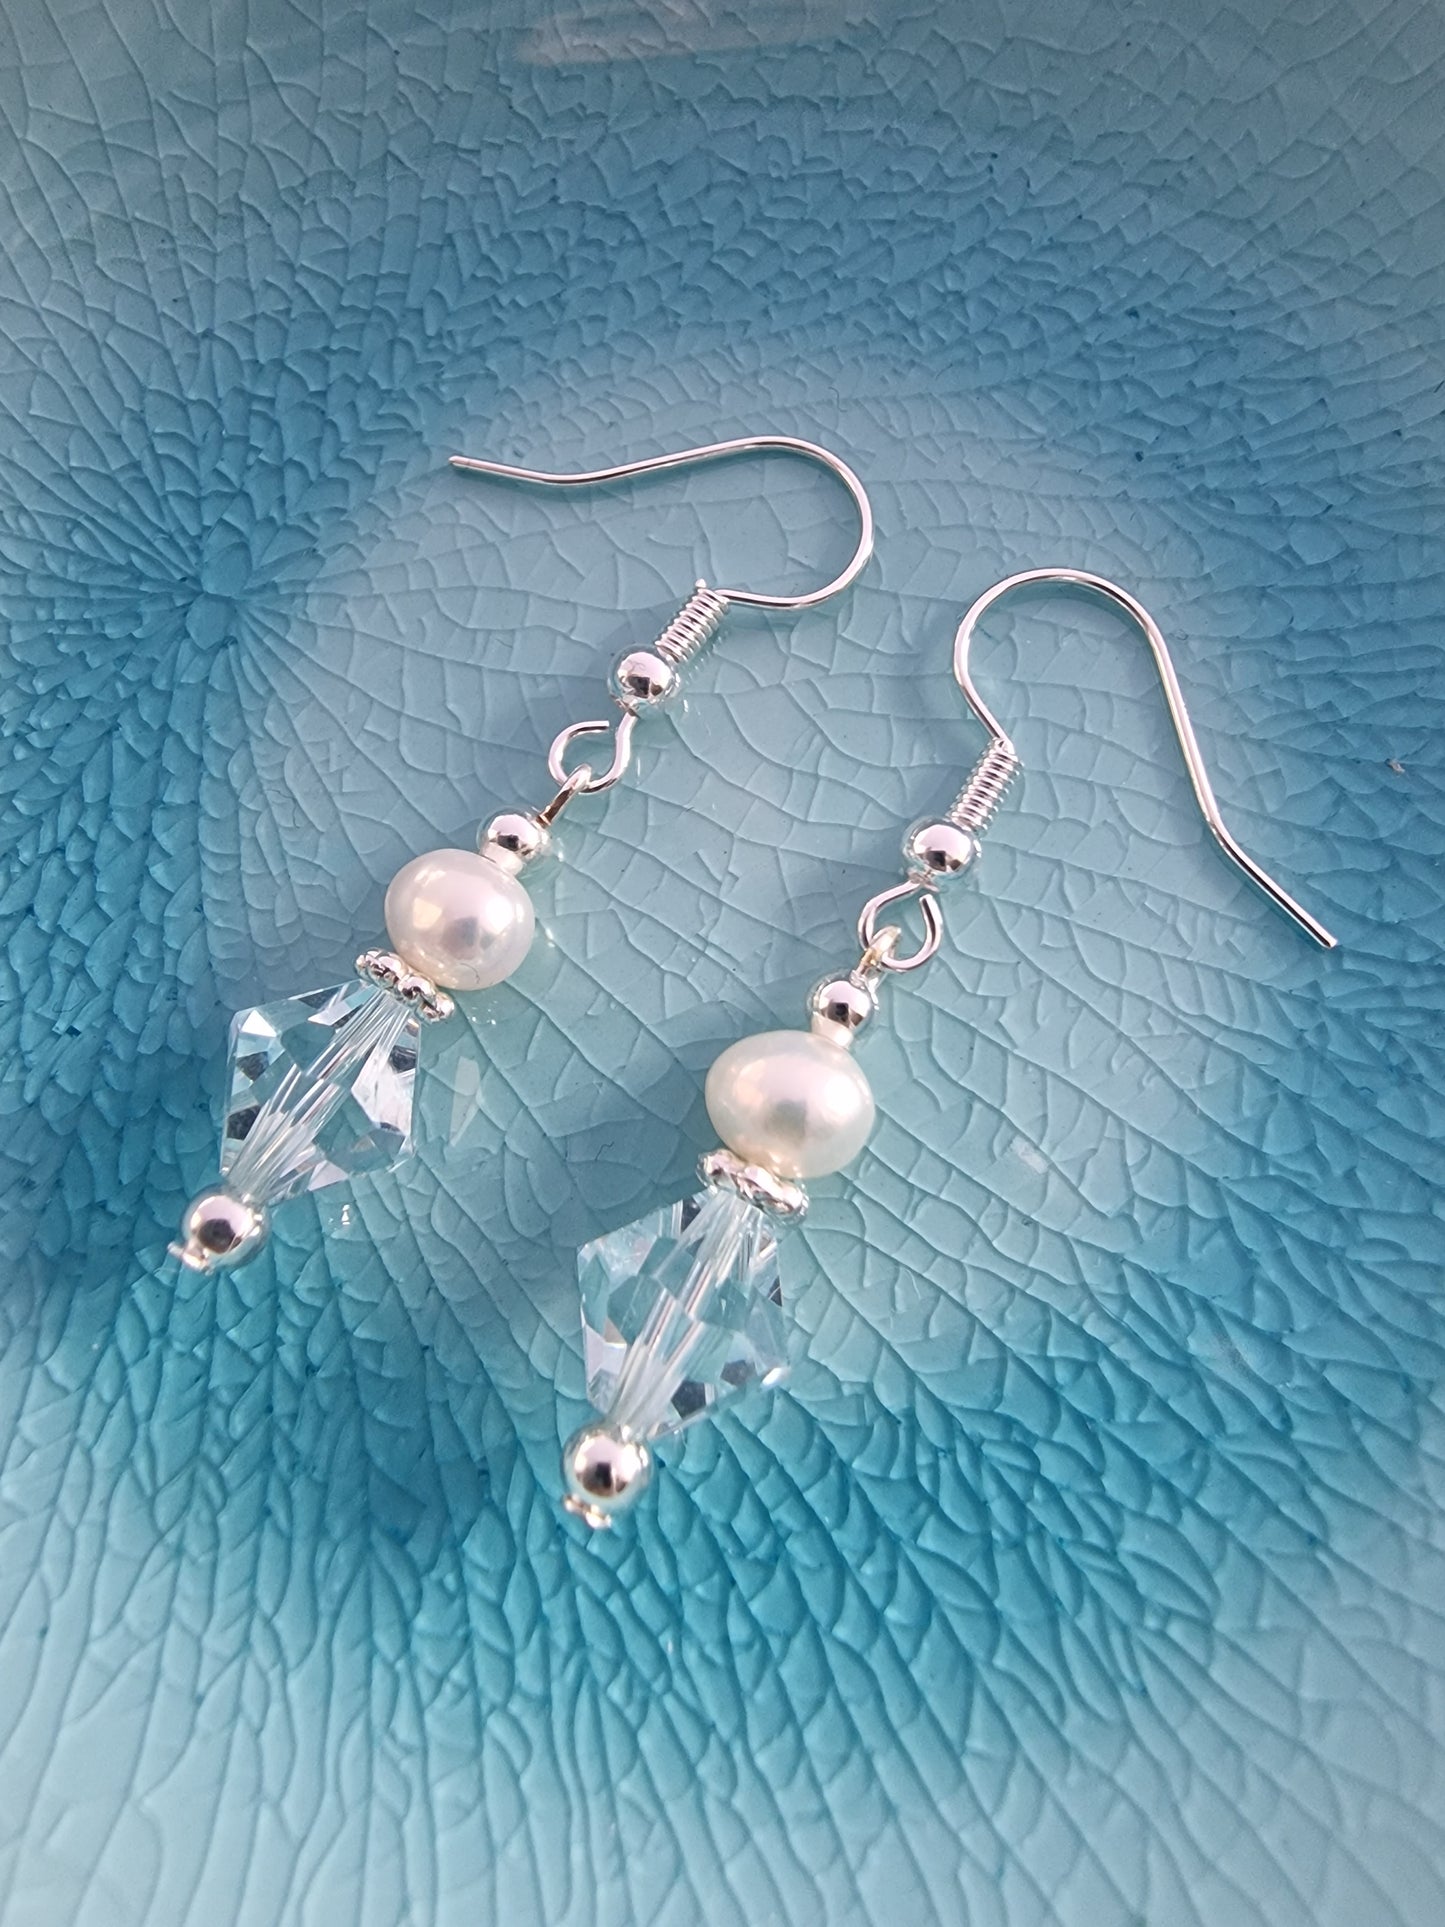 Light Azure Blue Swarovski Crystal and Pearl Silver Earrings